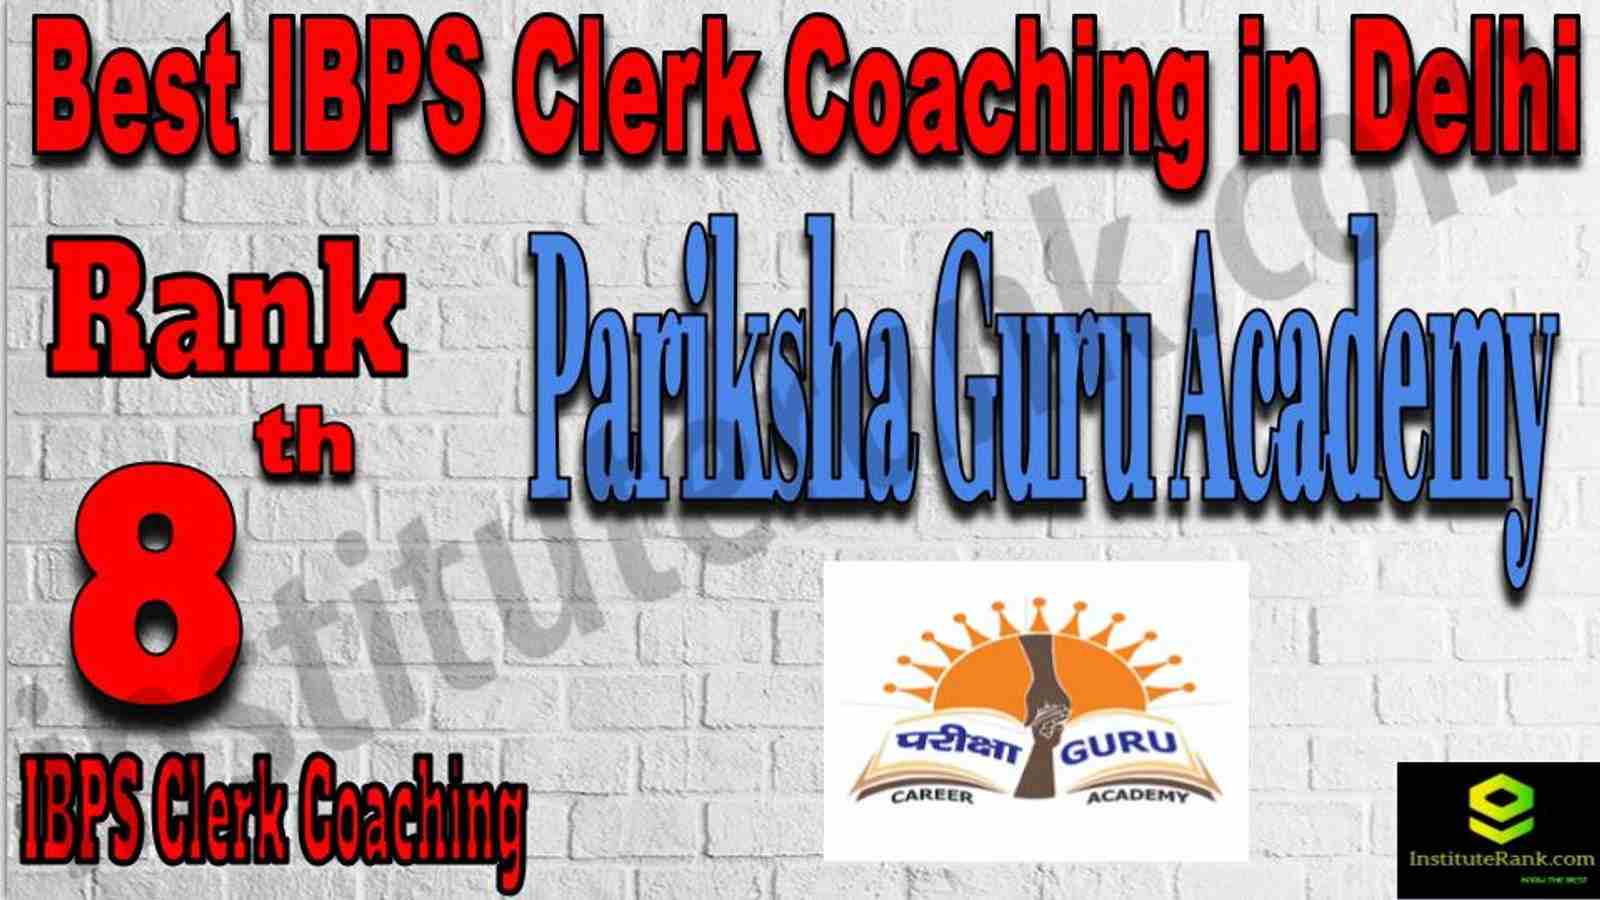 Rank 8 Best IBPS Clerk Coaching in Delhi